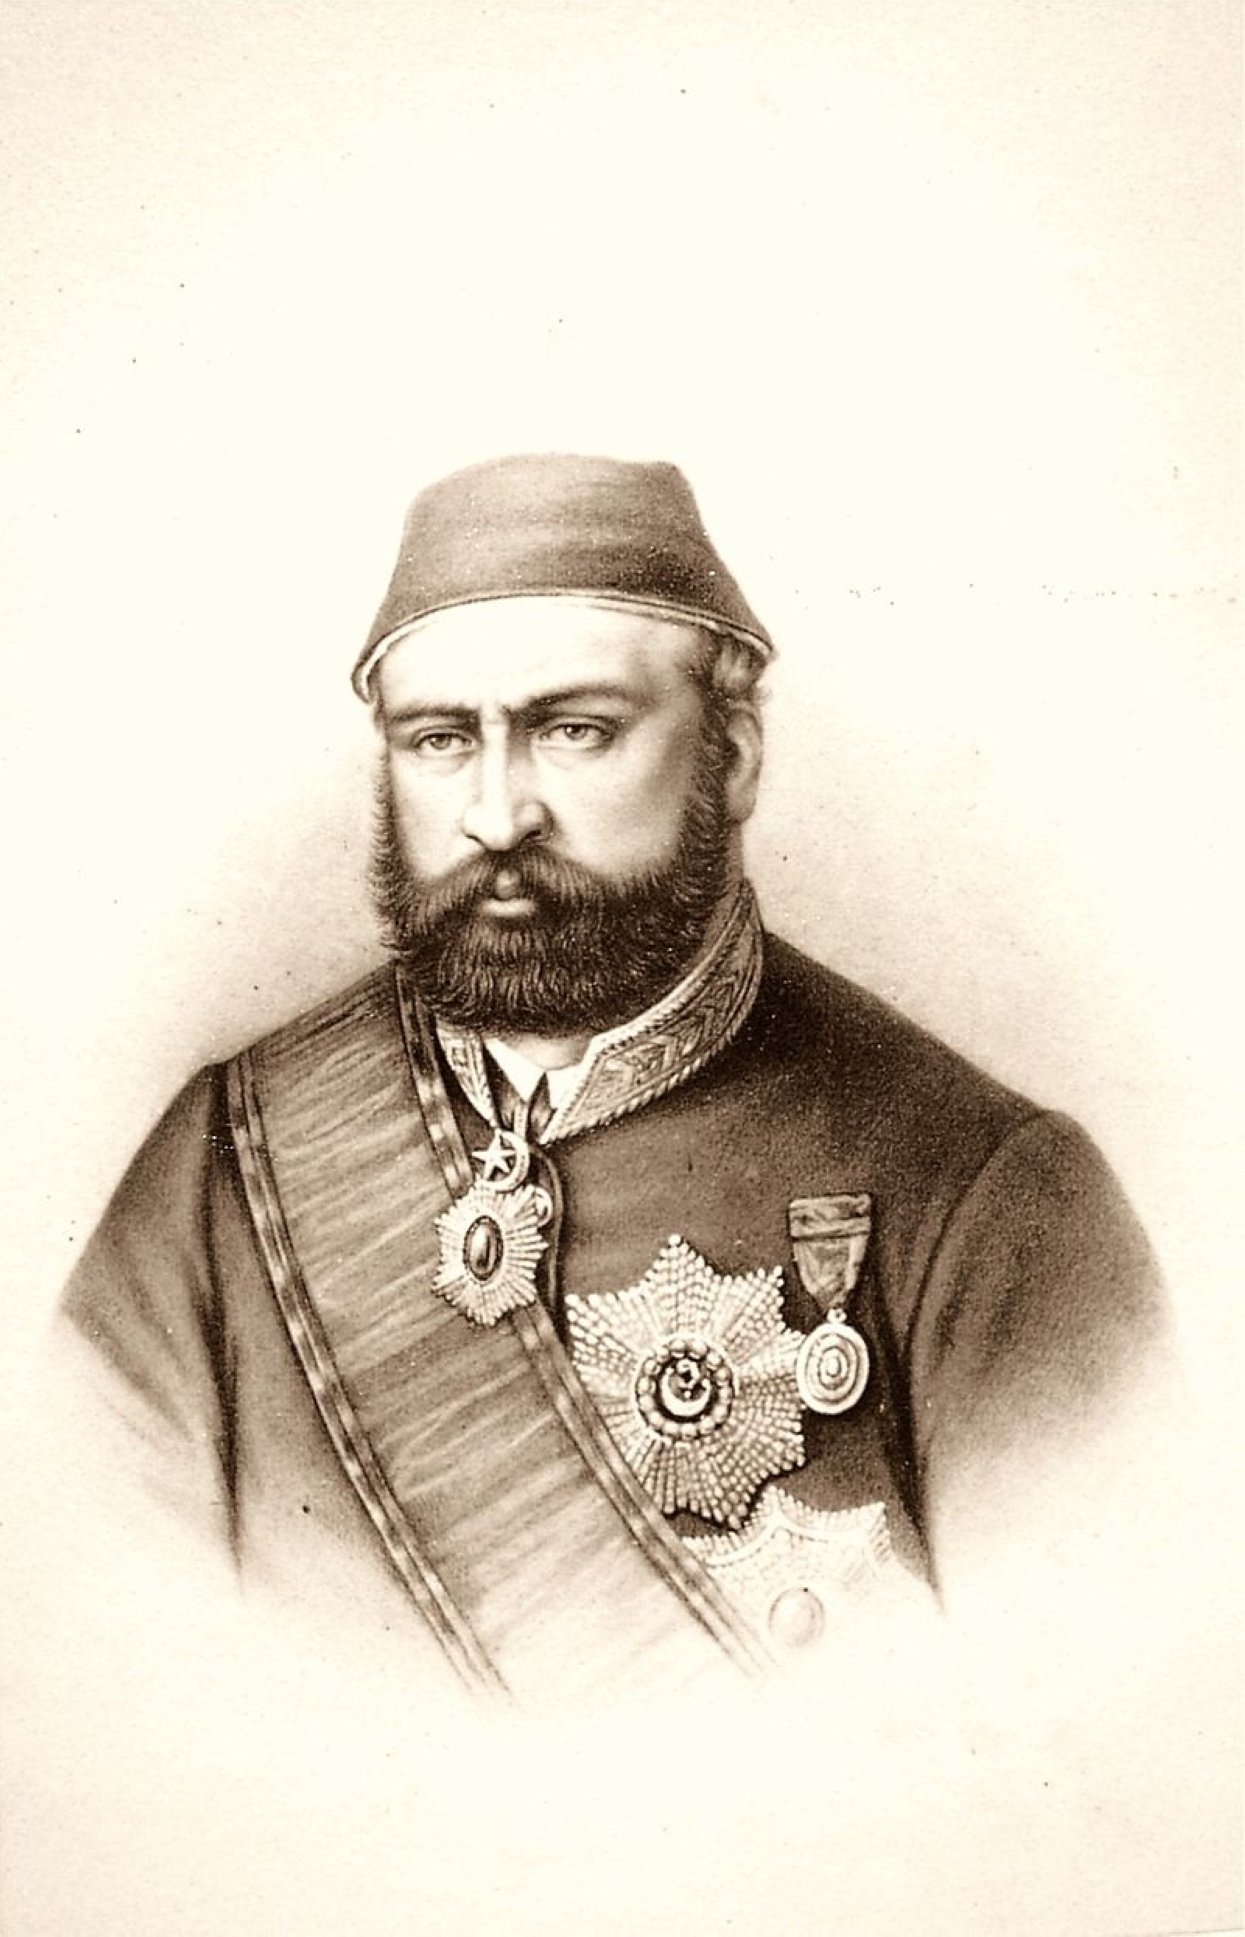 A portrait of Sultan Abdülaziz.